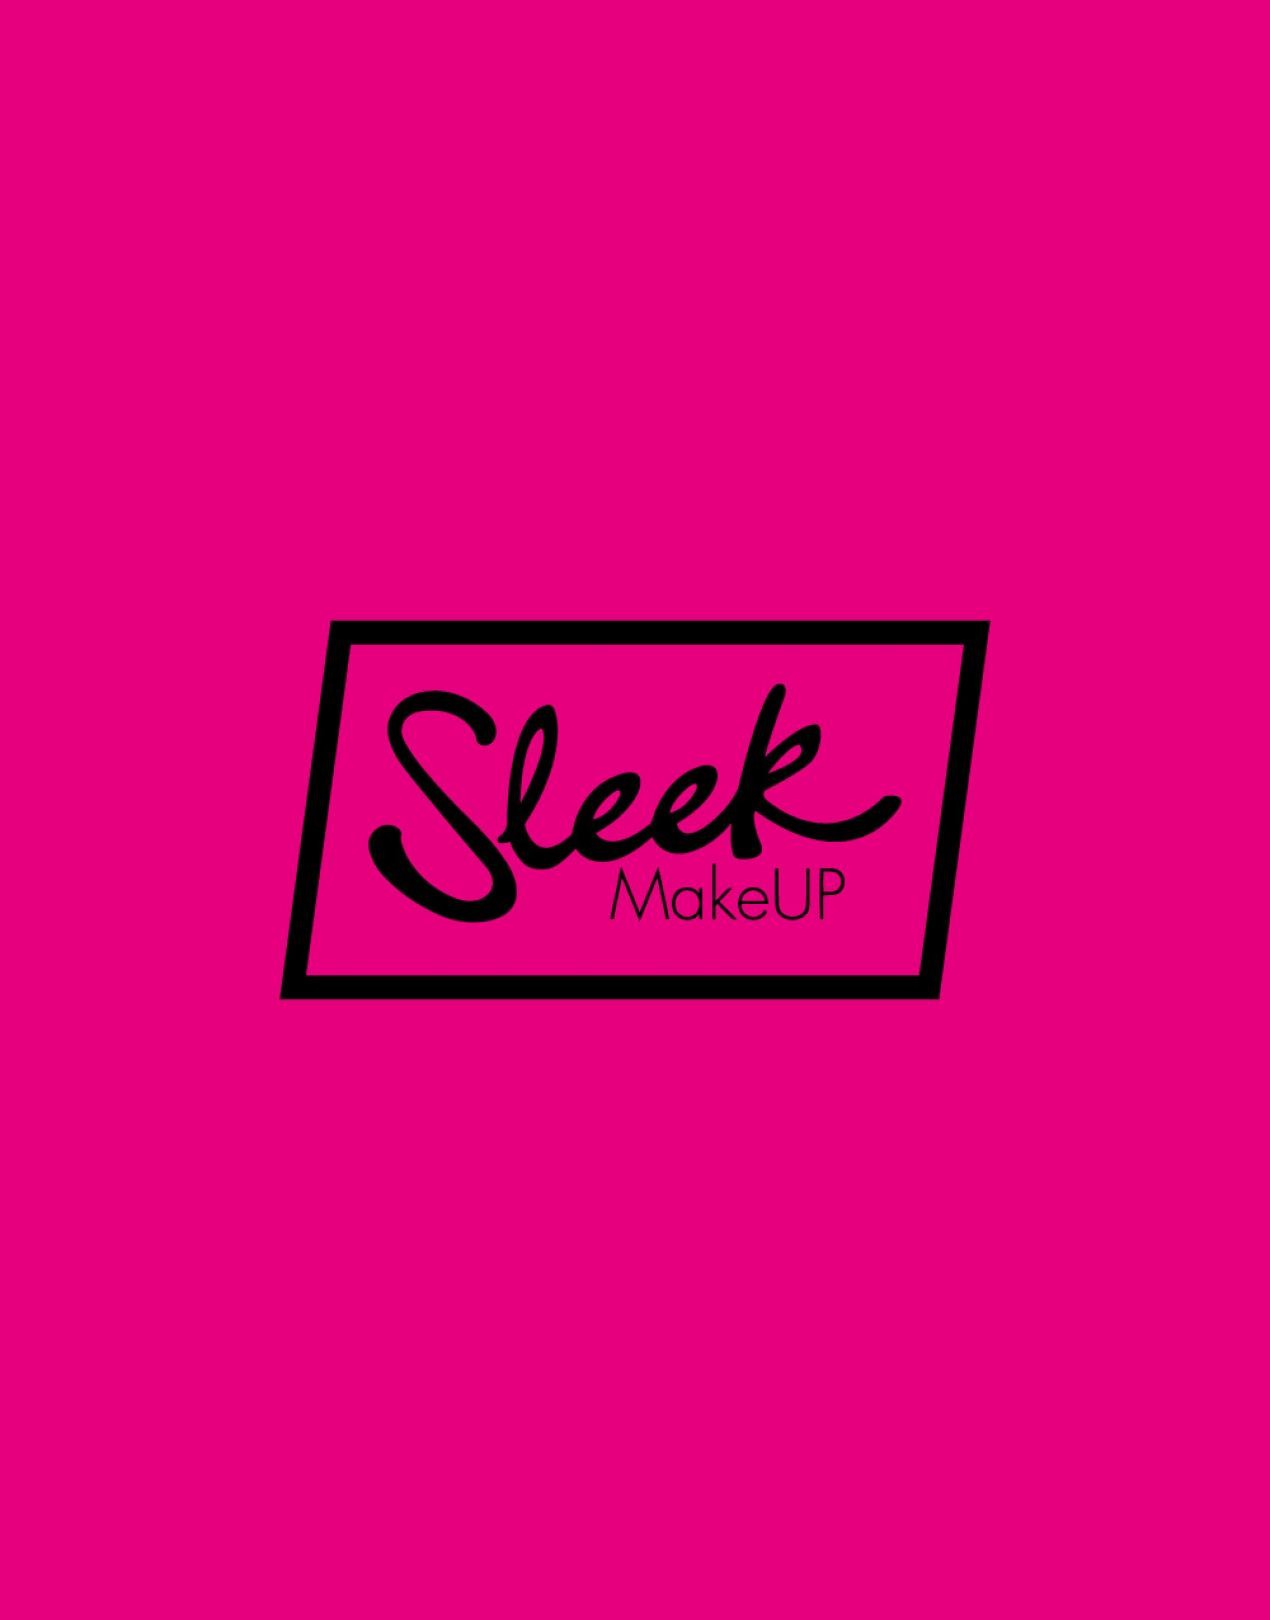 Black Sleek Logo on Pink Background